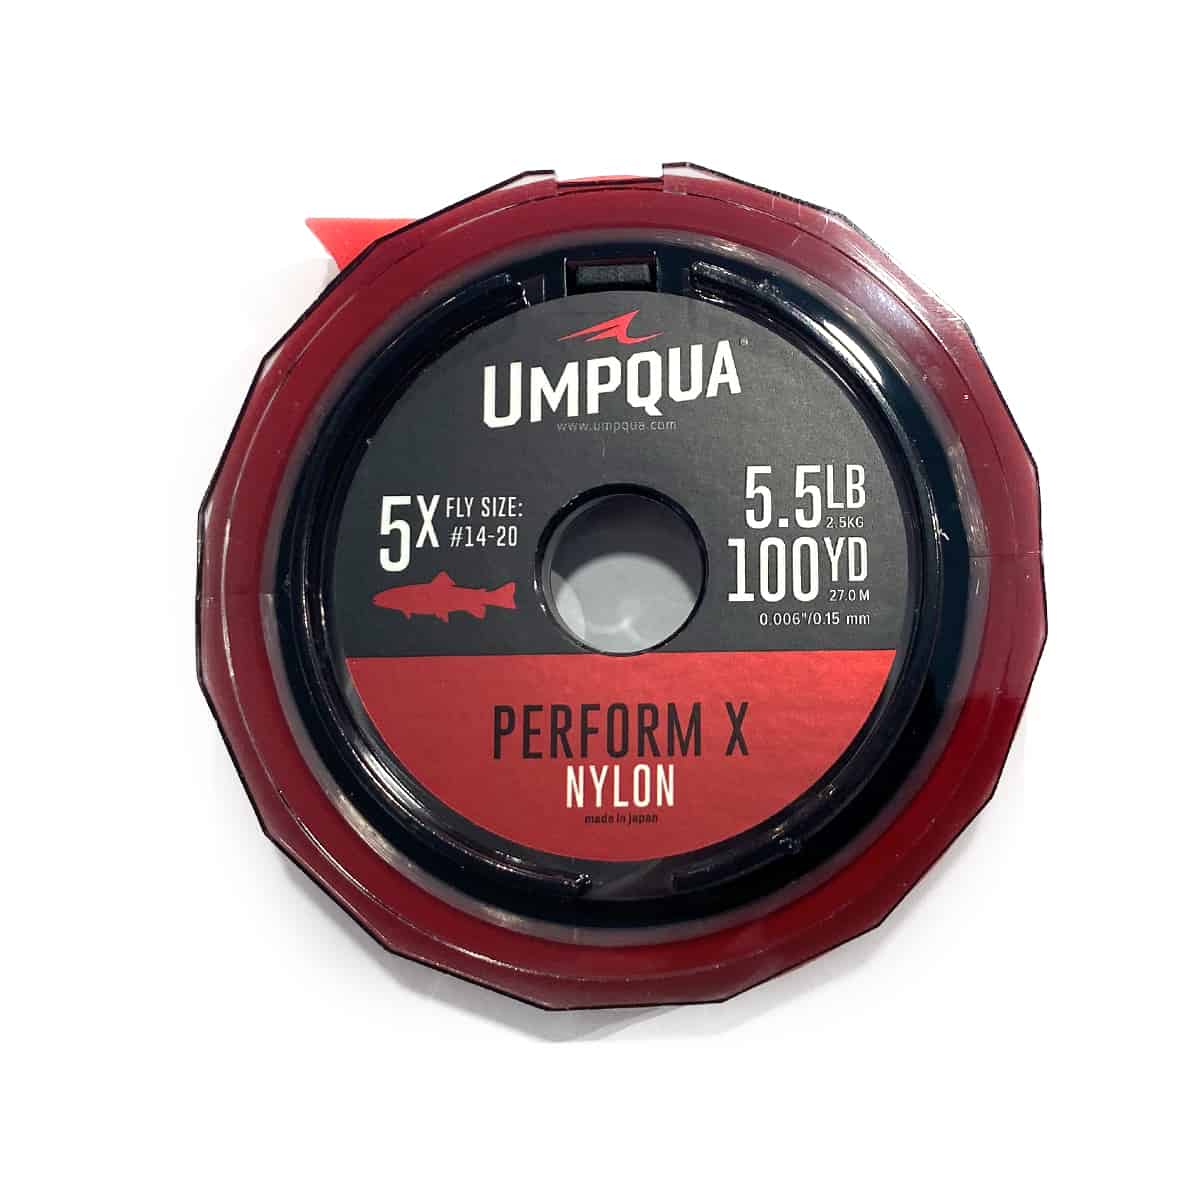 Umpqua Perform X Nylon Trout Tippet - 100 Yd. Guide Spool - basin + bend